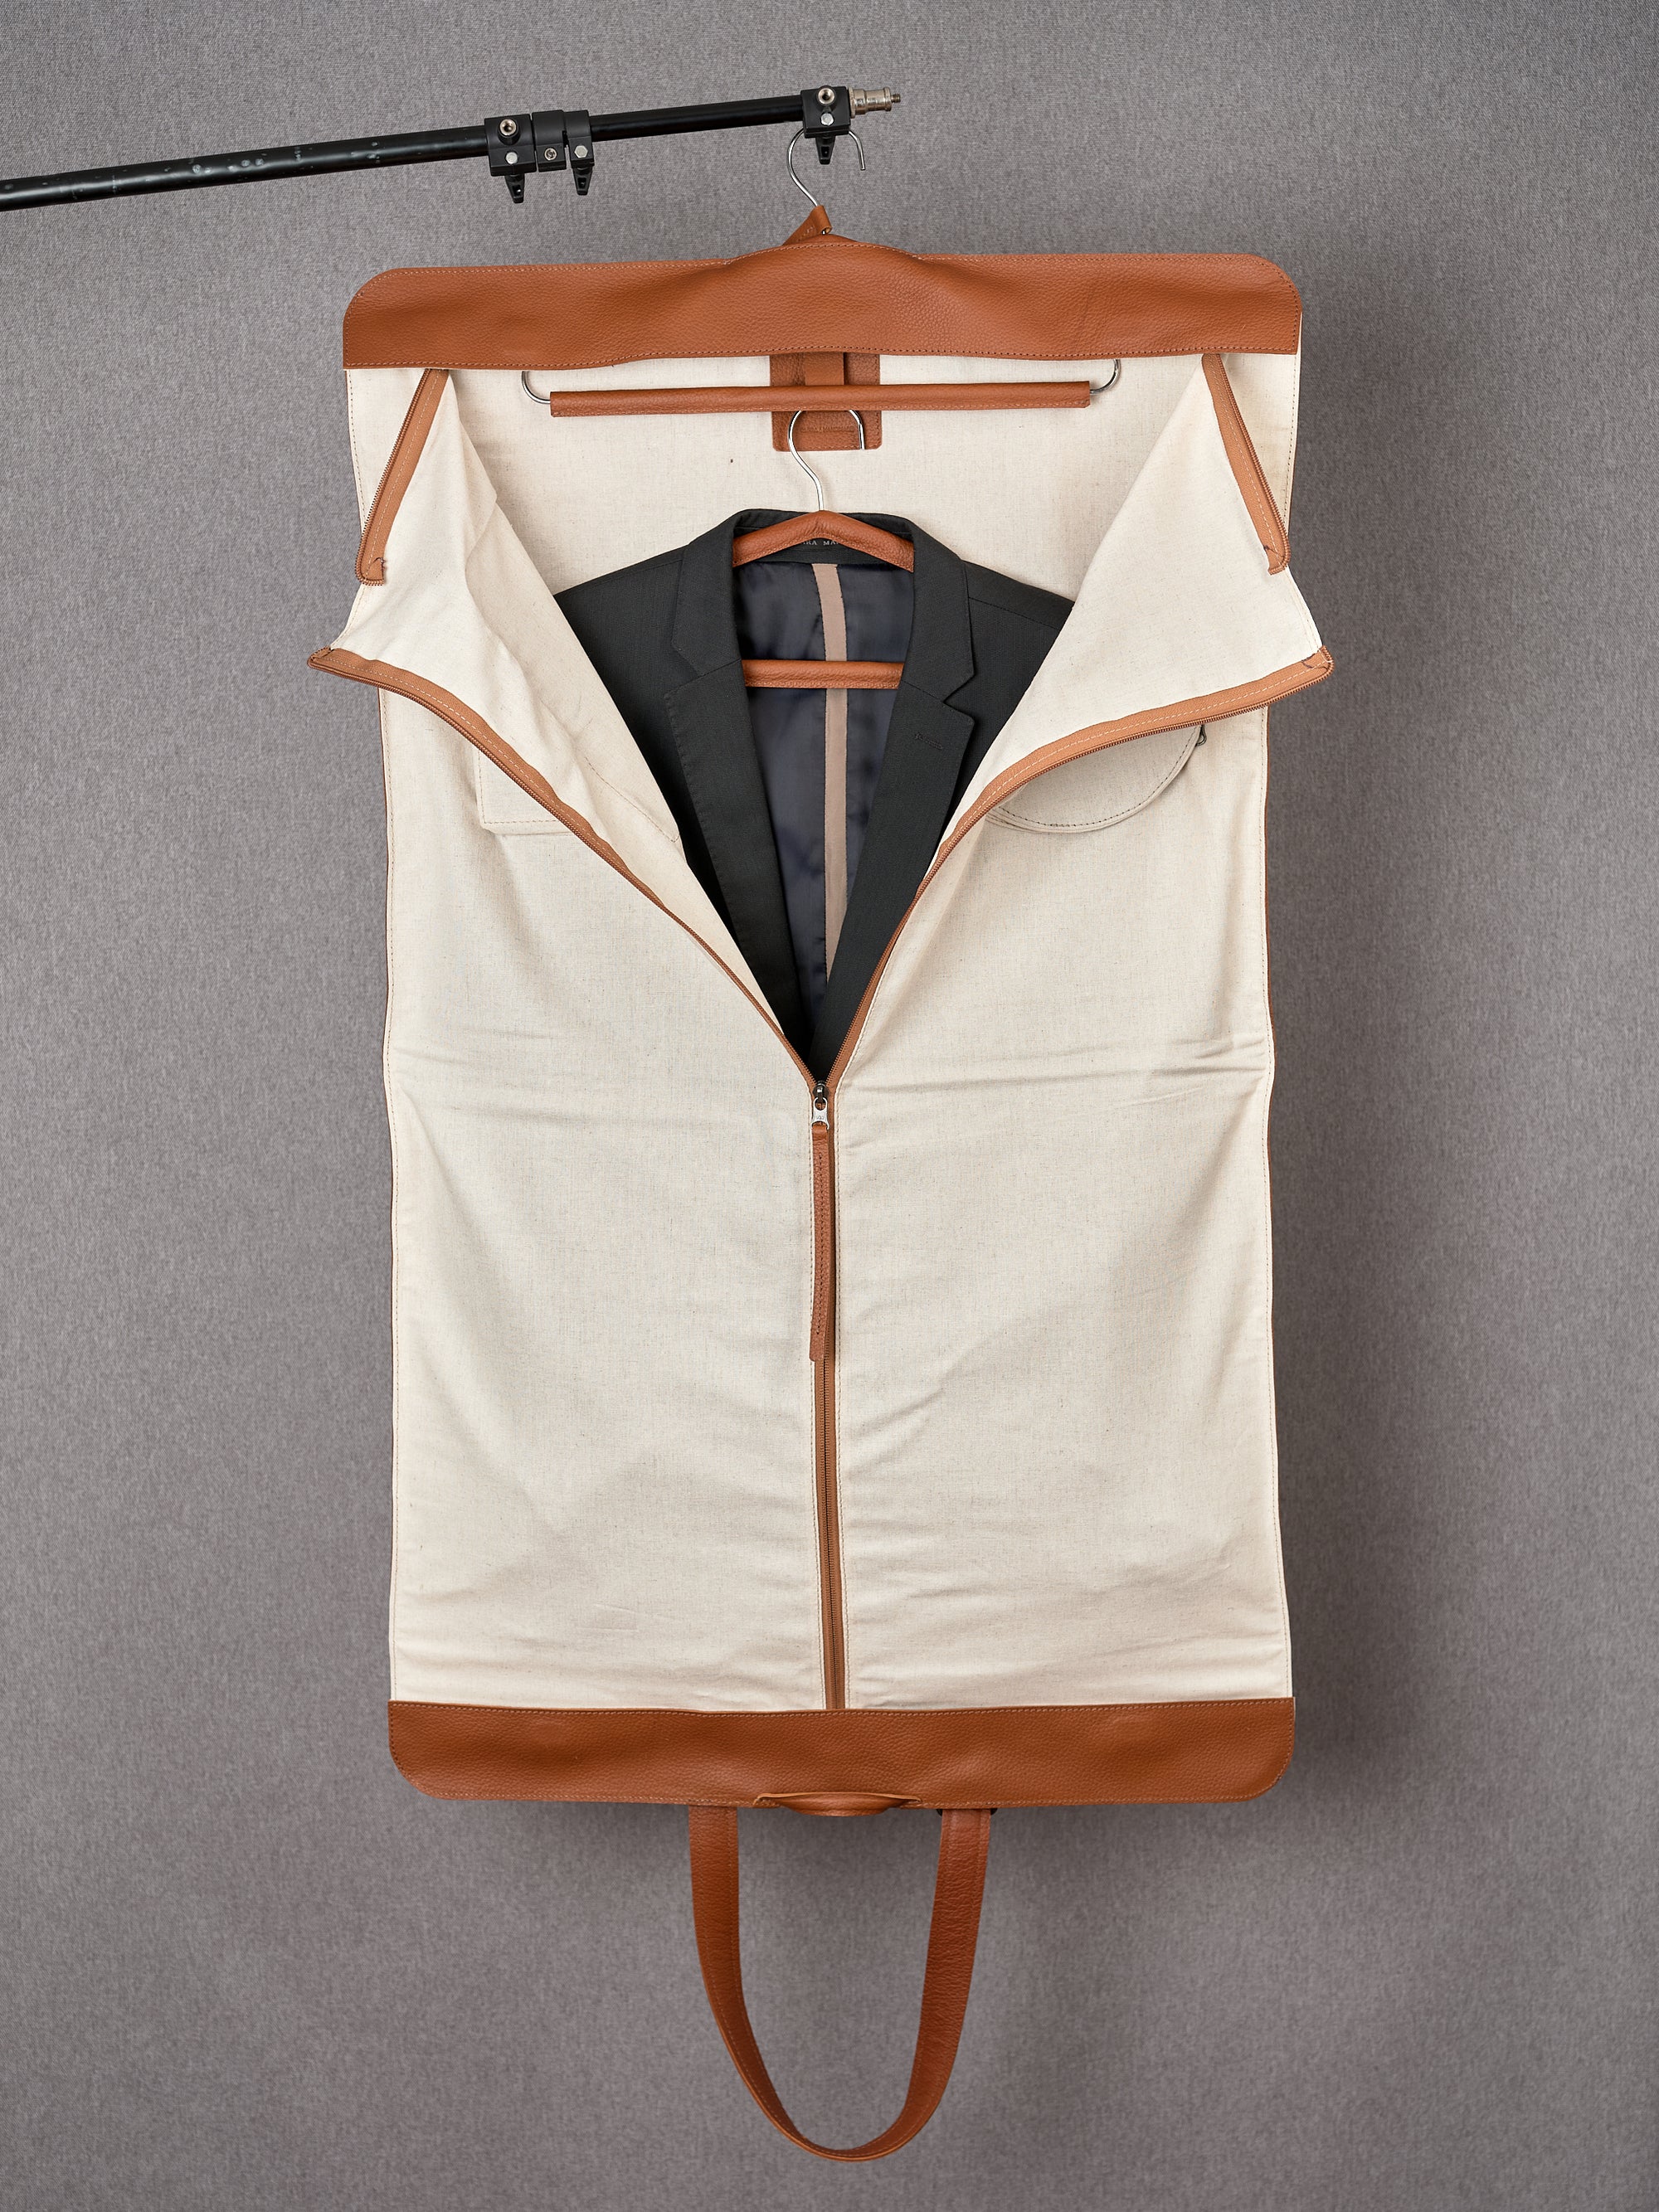 Foldable Garment Bag Tan by Capra Leather